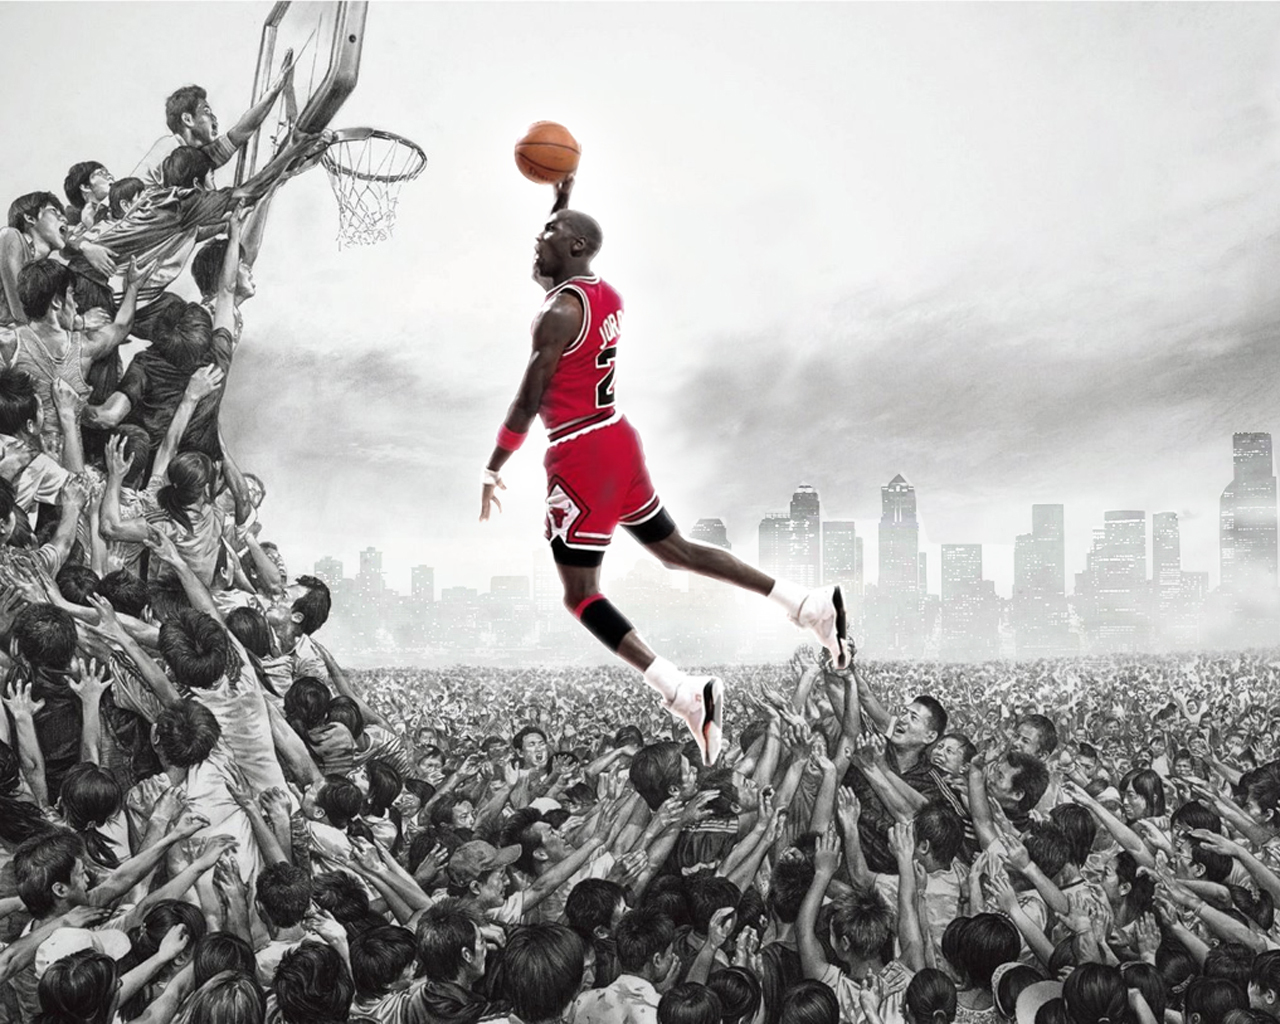 Michael Jordan Wallpaper HD Pictures 2013 1280x1024 pixel Popular HD 1280x1024